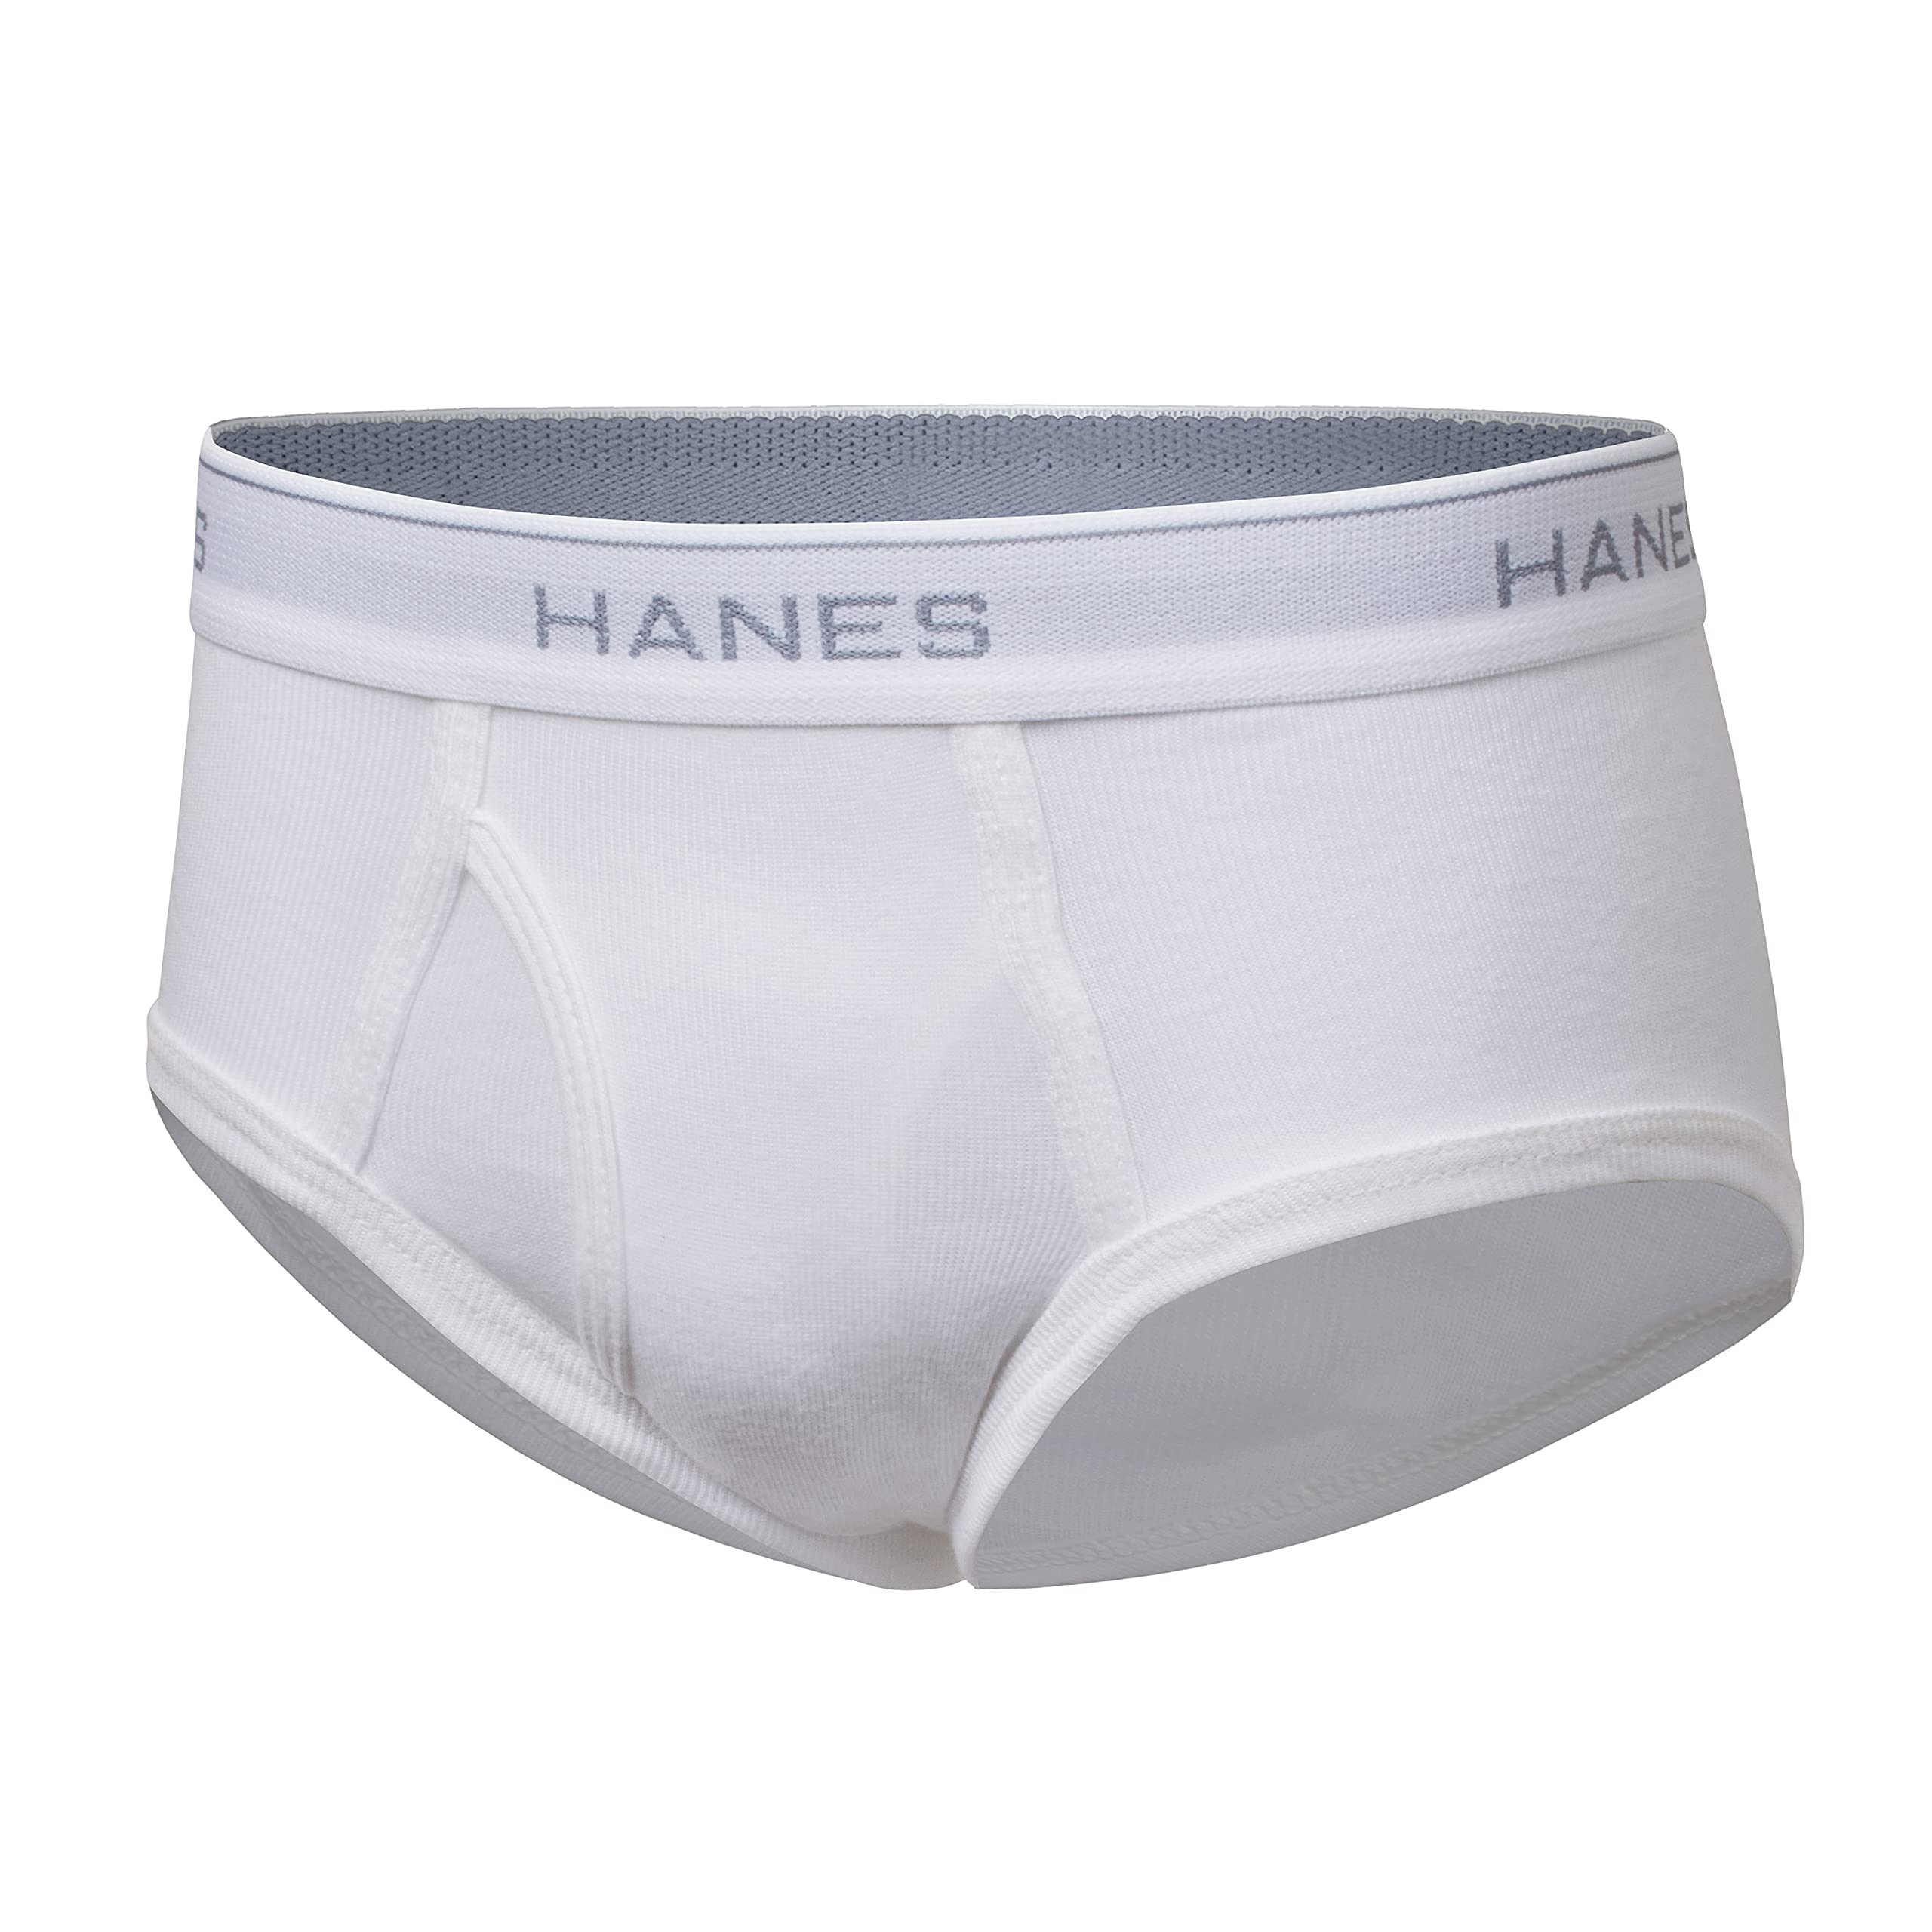 Hanes Boys' Underwear, Comfort Flex Waistband Briefs, Multiple Packs & Colors Available